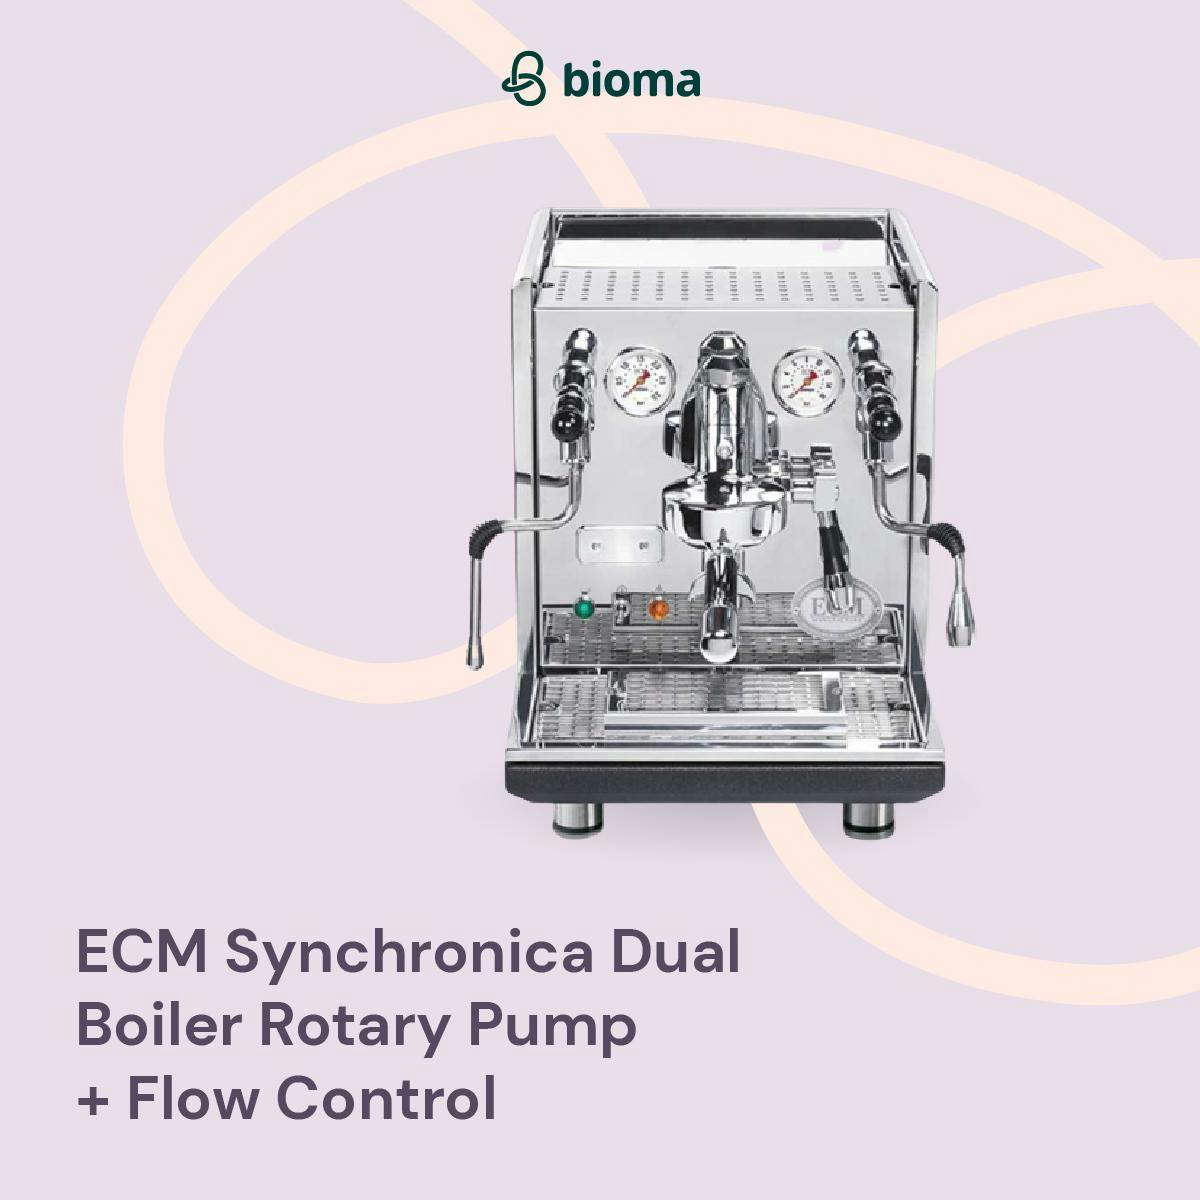 ECM Synchronica Dual Boiler Rotary Pump + Flow Control - Flow Control